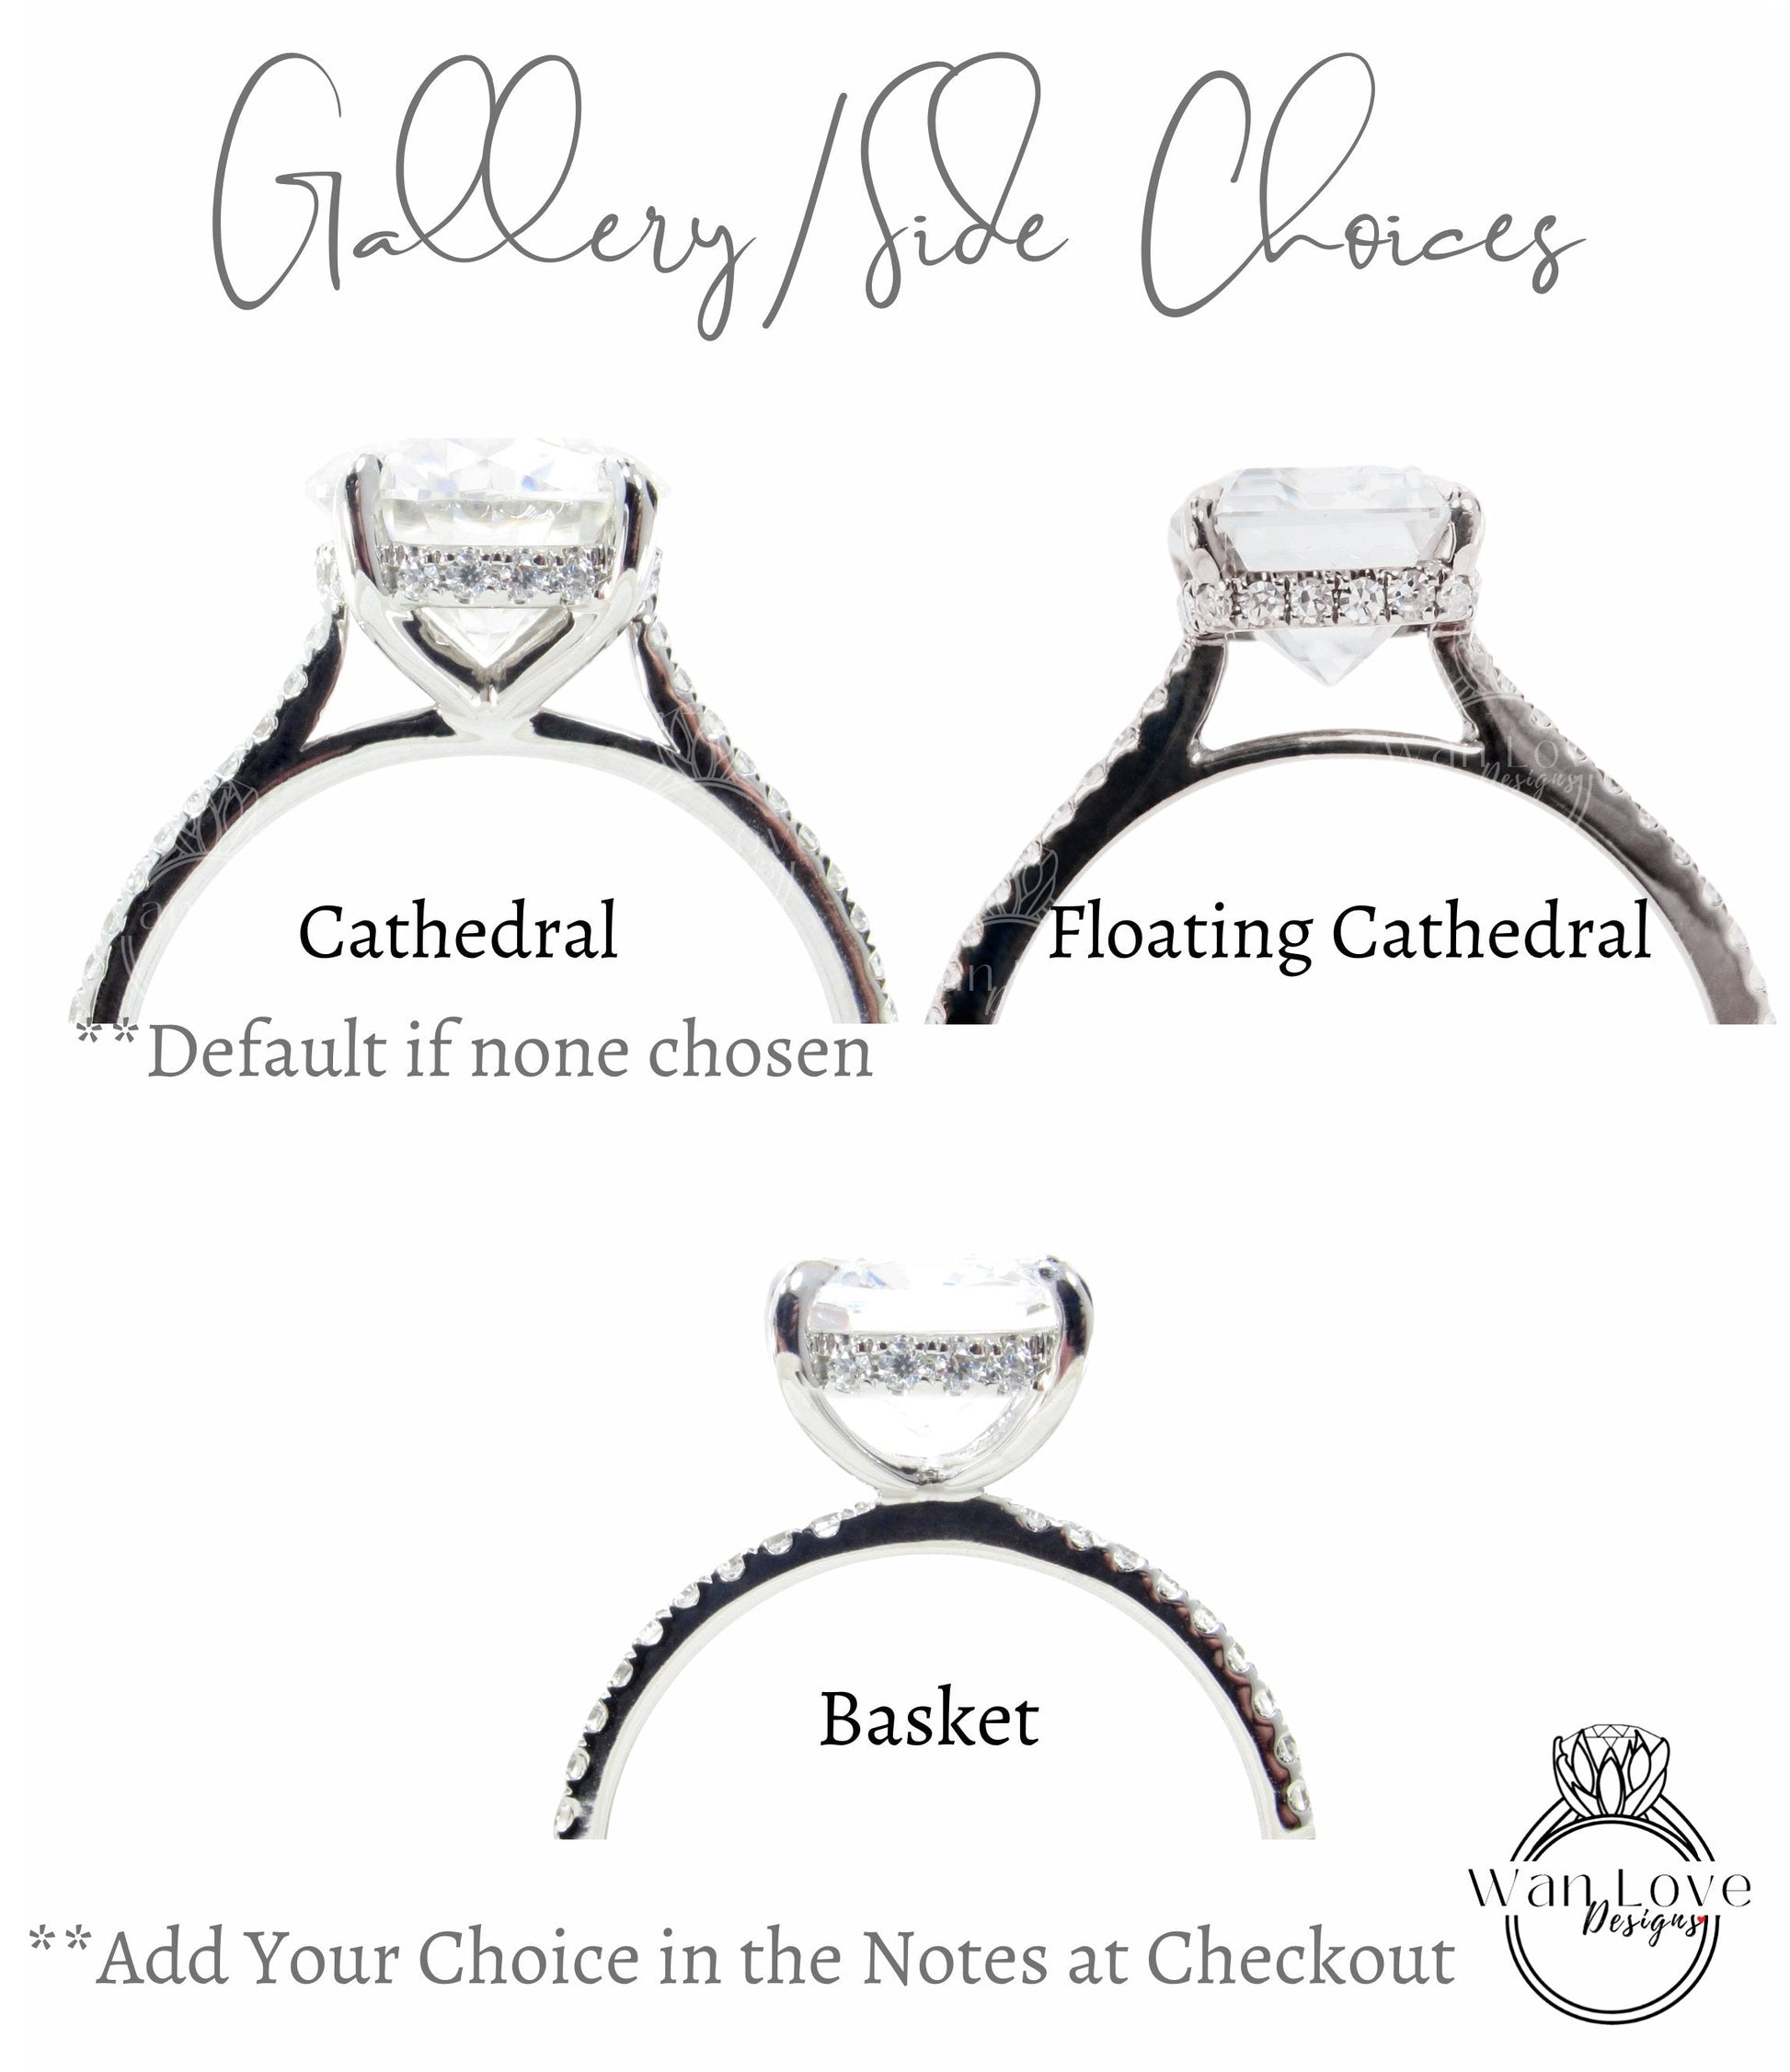 2ct Pear Moissanite Diamond Wedding Ring/Diamond side halo ring/Moissanite Engagement Ring/Stacking Ring/Promise ring/White gold ring Wan Love Designs